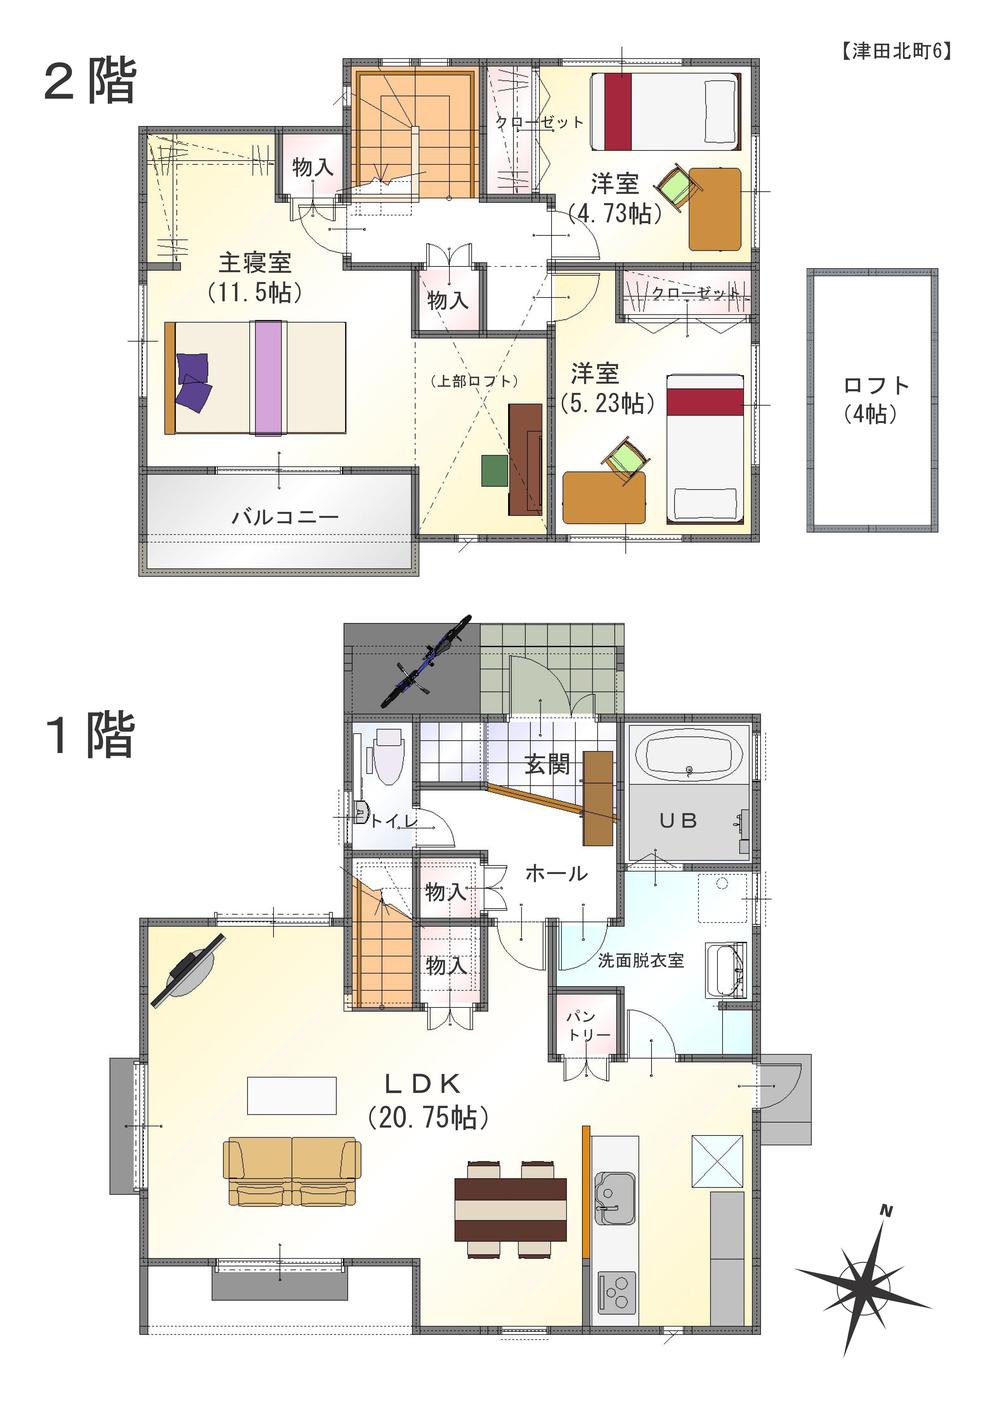 Floor plan. (No. 6 locations), Price 35,144,000 yen, 3LDK, Land area 162.19 sq m , Building area 102.68 sq m